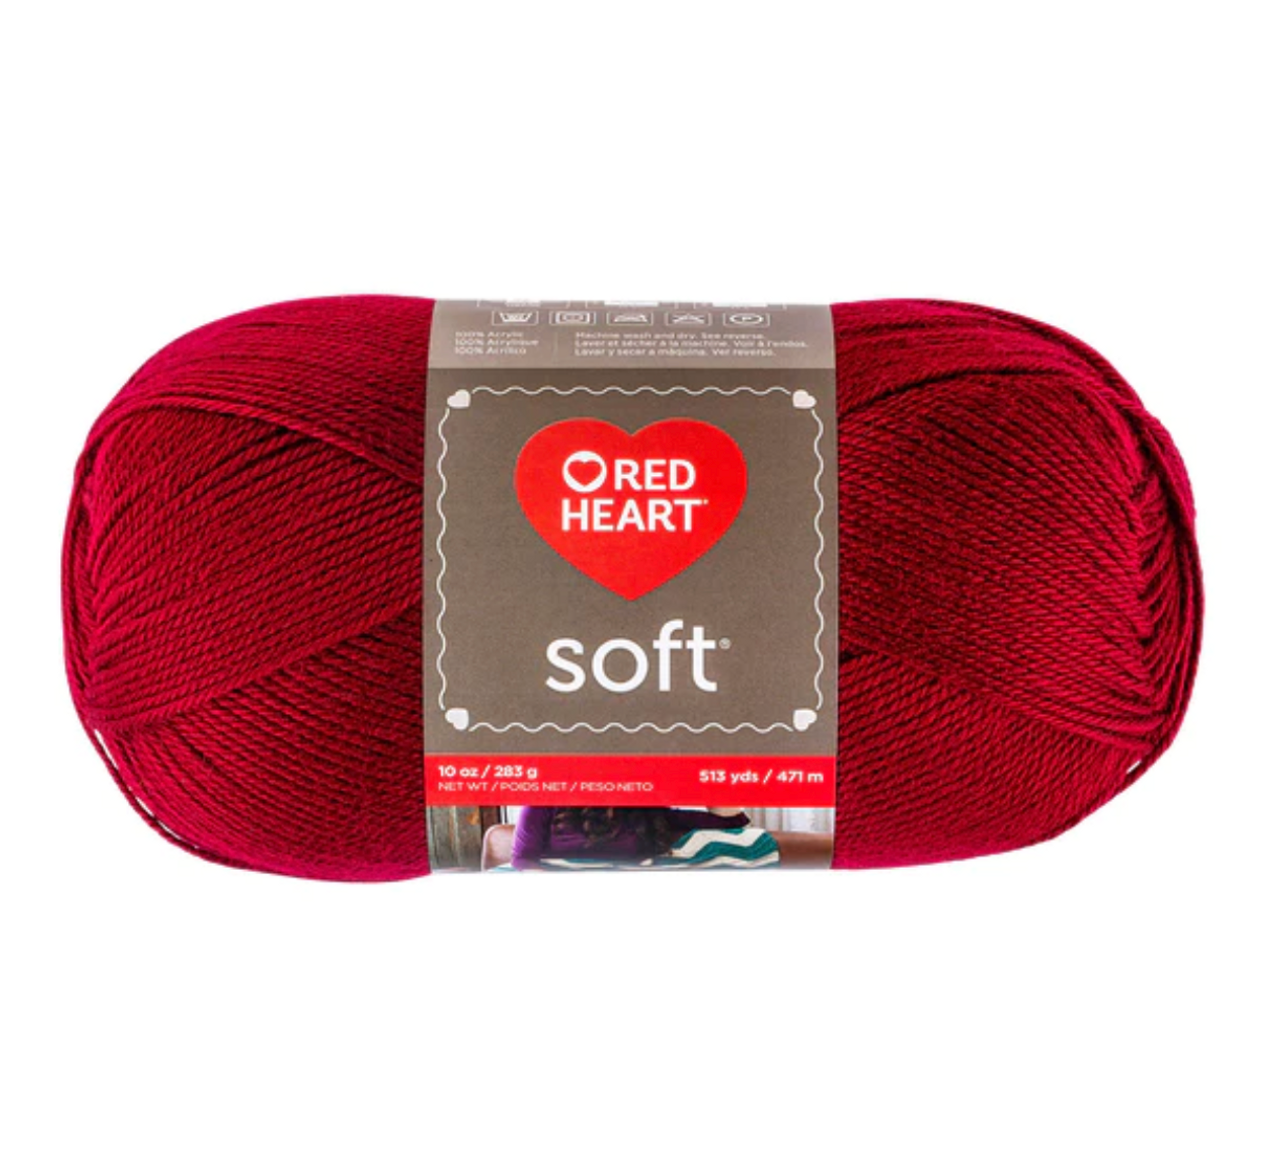 Red Heart Soft Wine Acrylic Knitting & Crochet Yarn